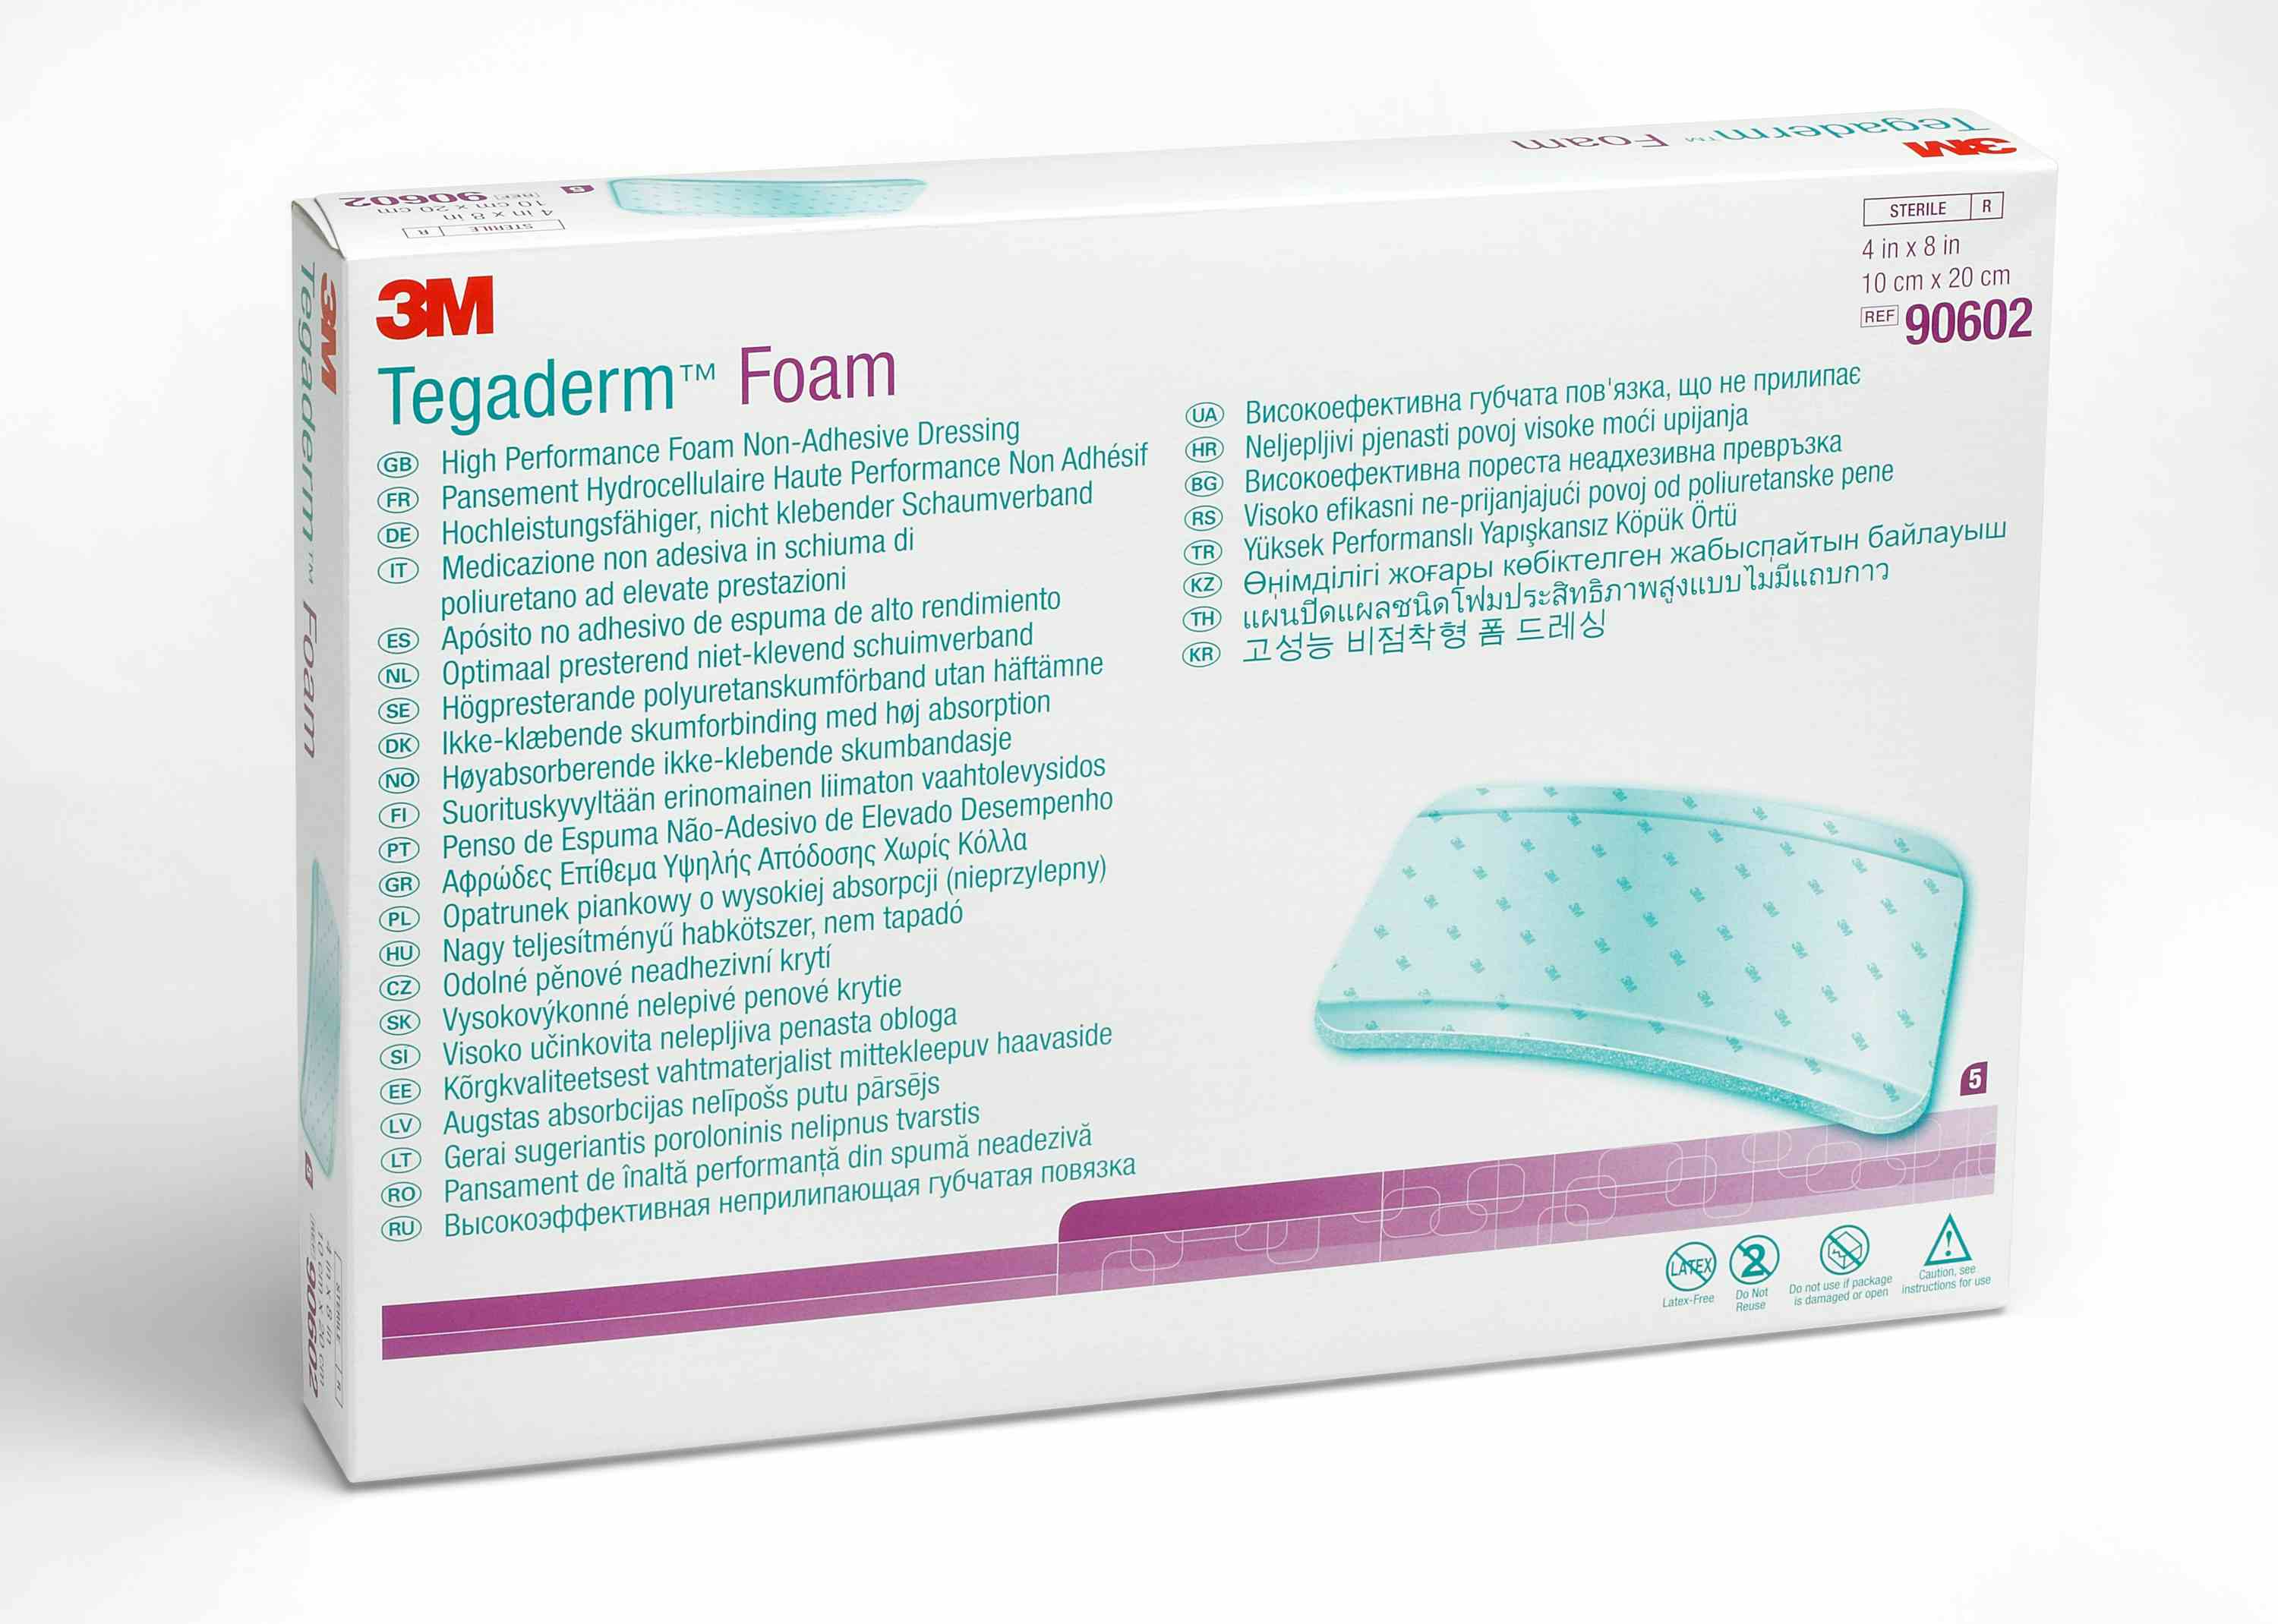 3M Tegaderm Foam High Performance Foam Non-Adhesive Dressing, 4 X 8", 90602, Box of 5